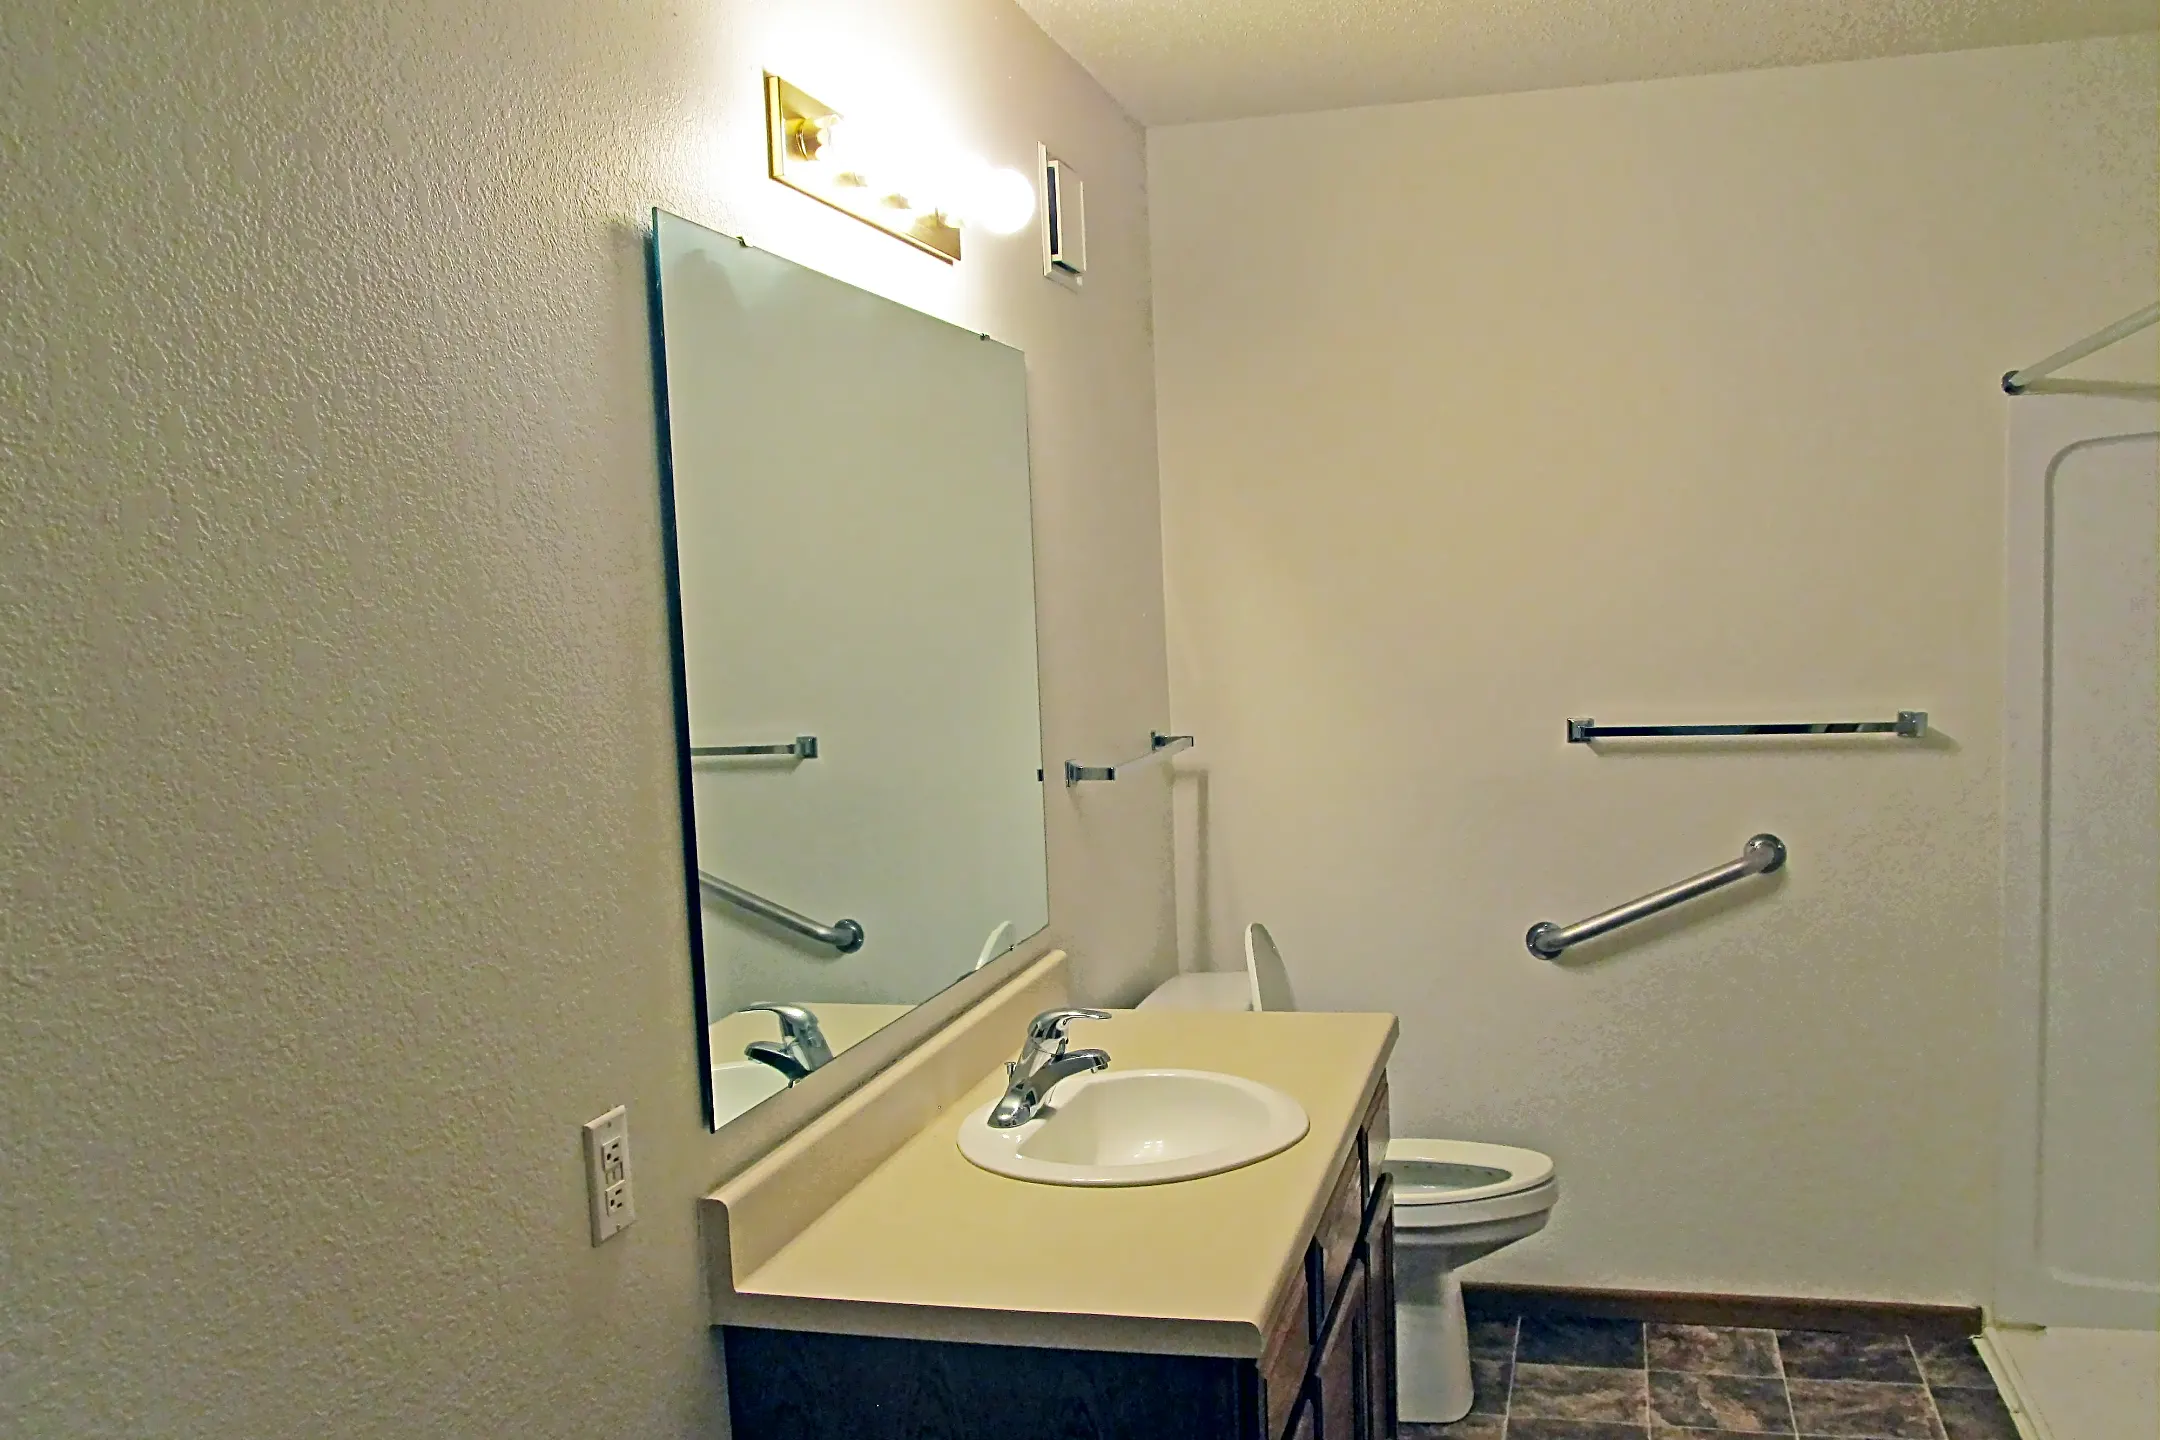 Bathroom - Rattenborg Townhomes - West Fargo, ND